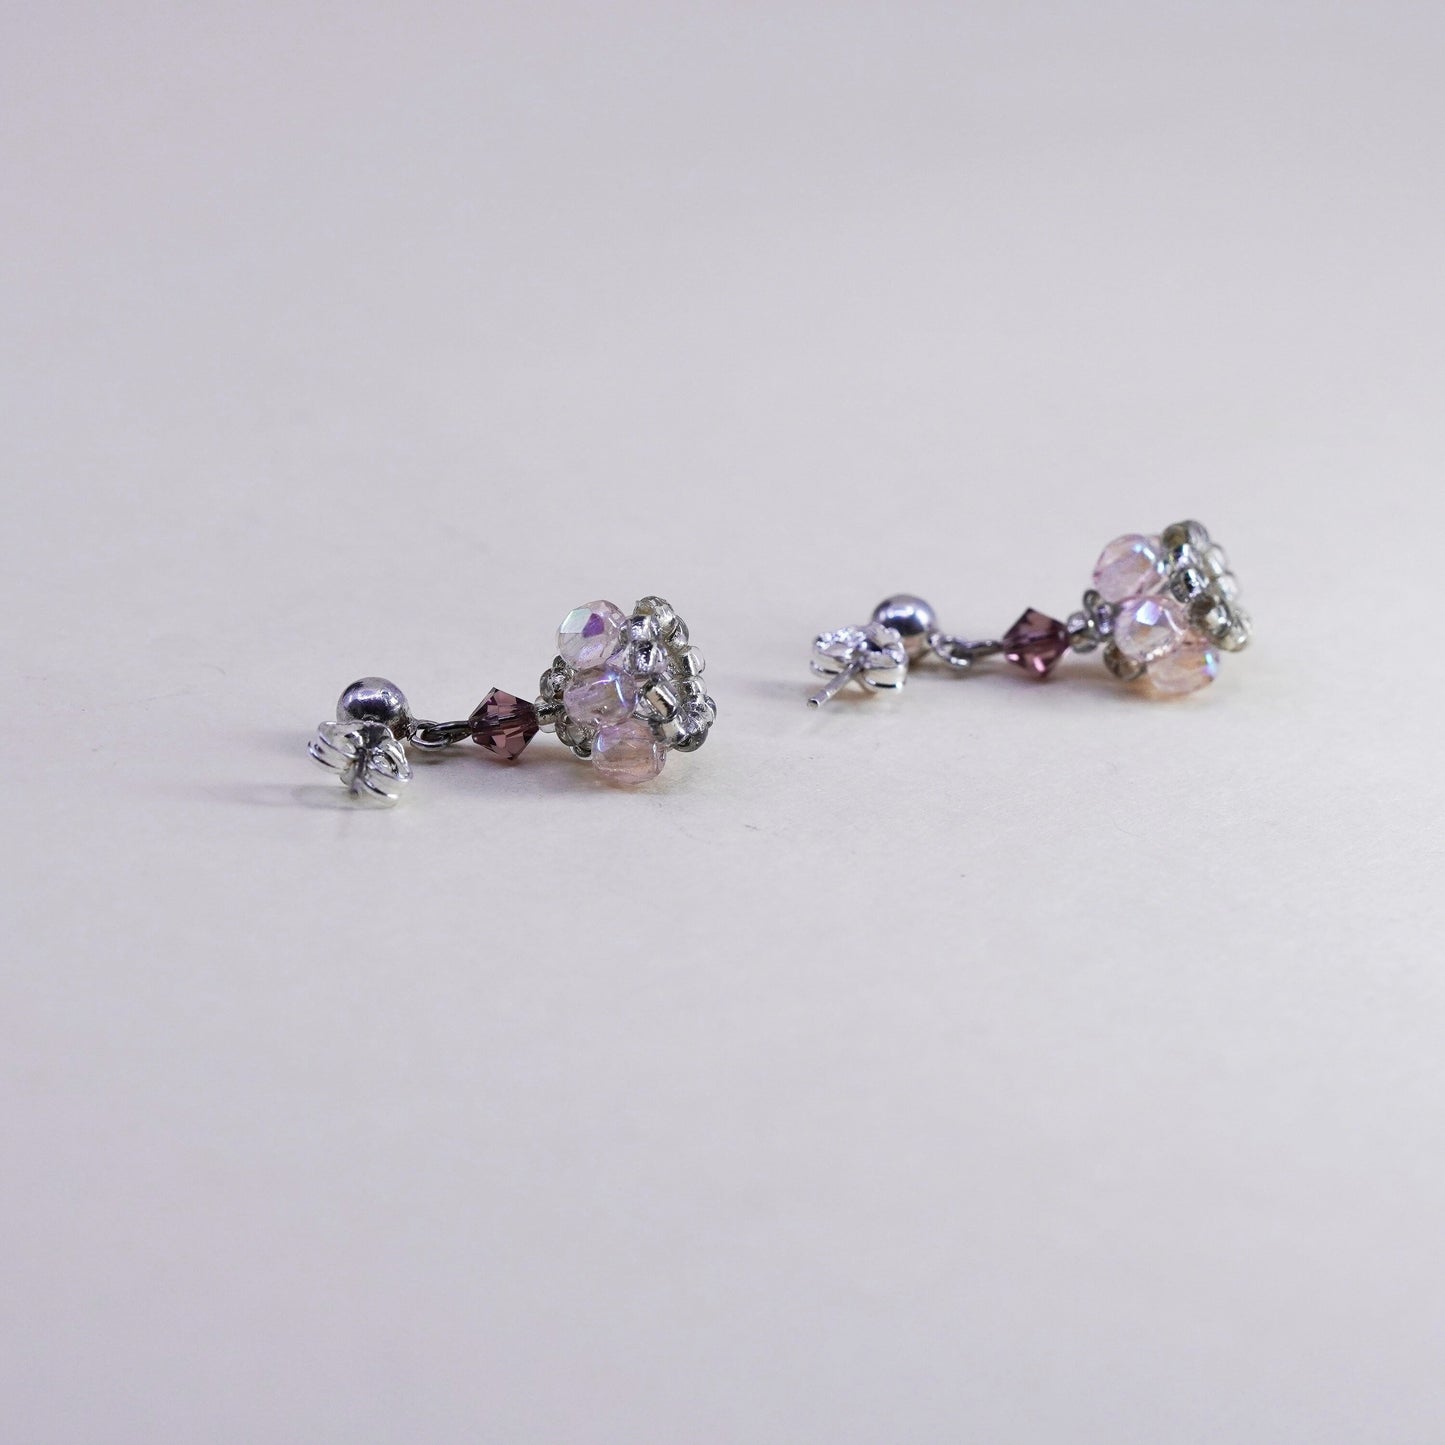 Vintage sterling 925 silver handmade earrings with crystal details